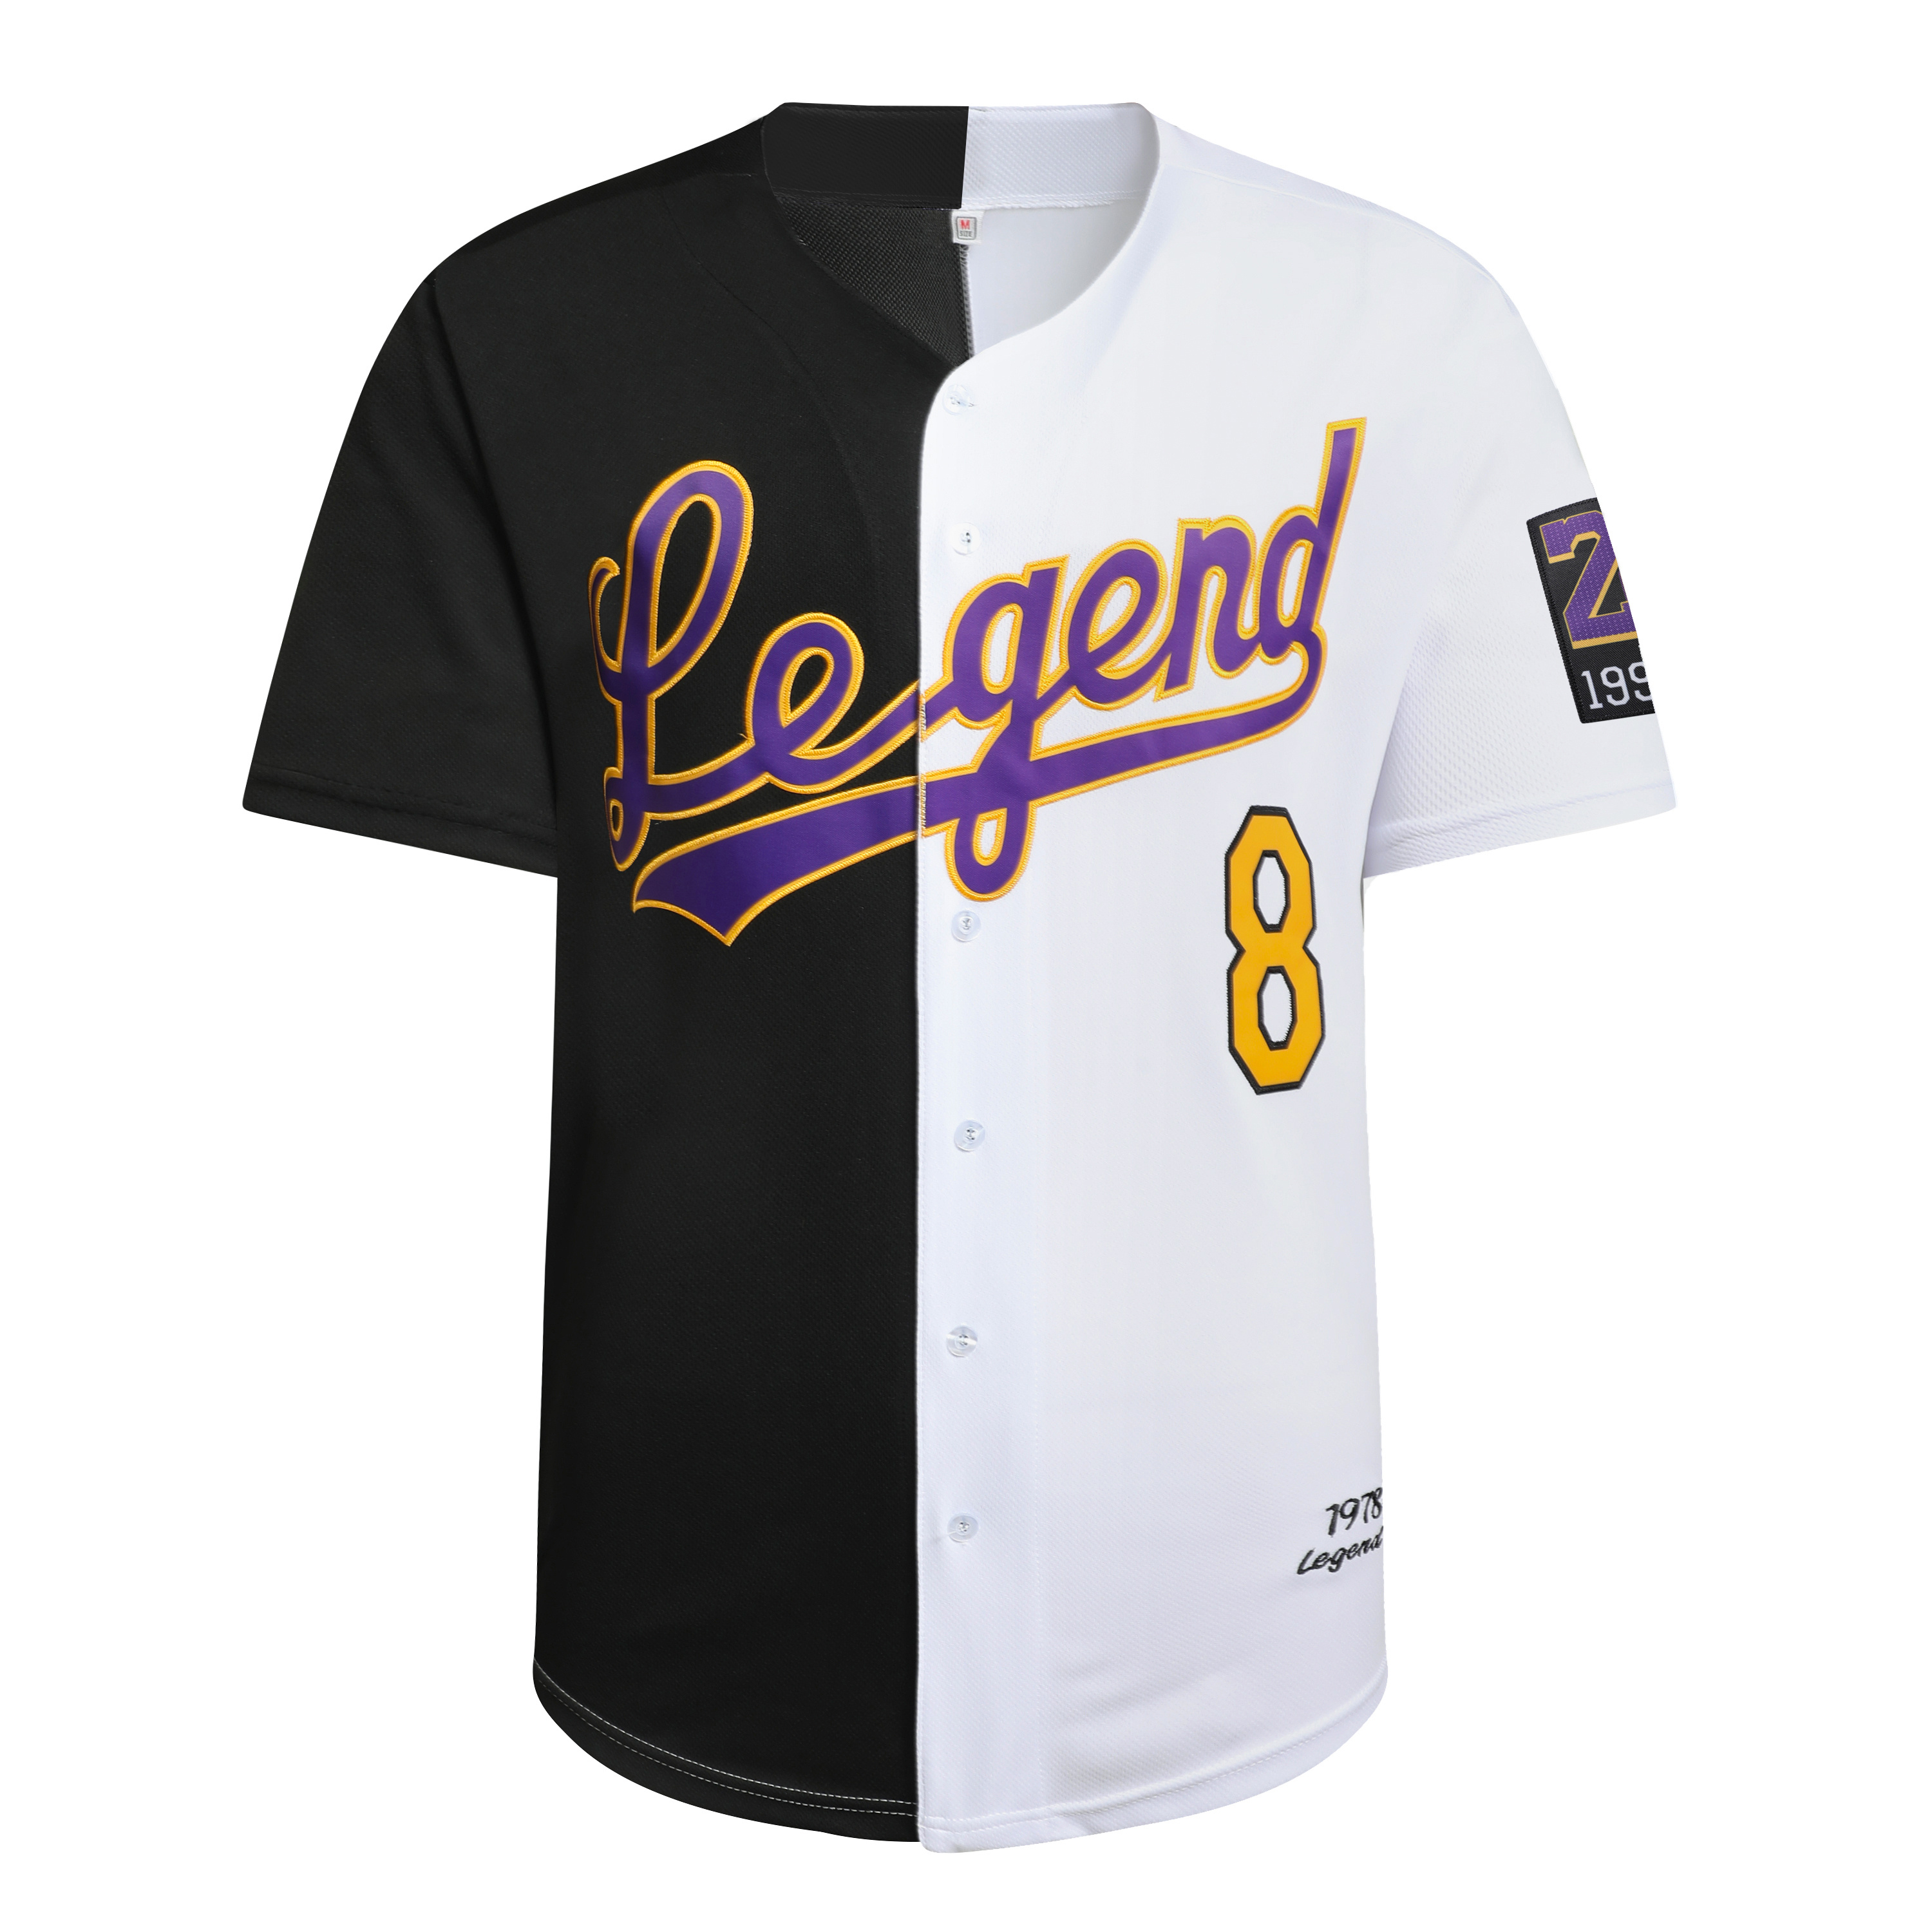 Retro Legend Men's Baseball Jersey - #8 Embroidery, Classic Black